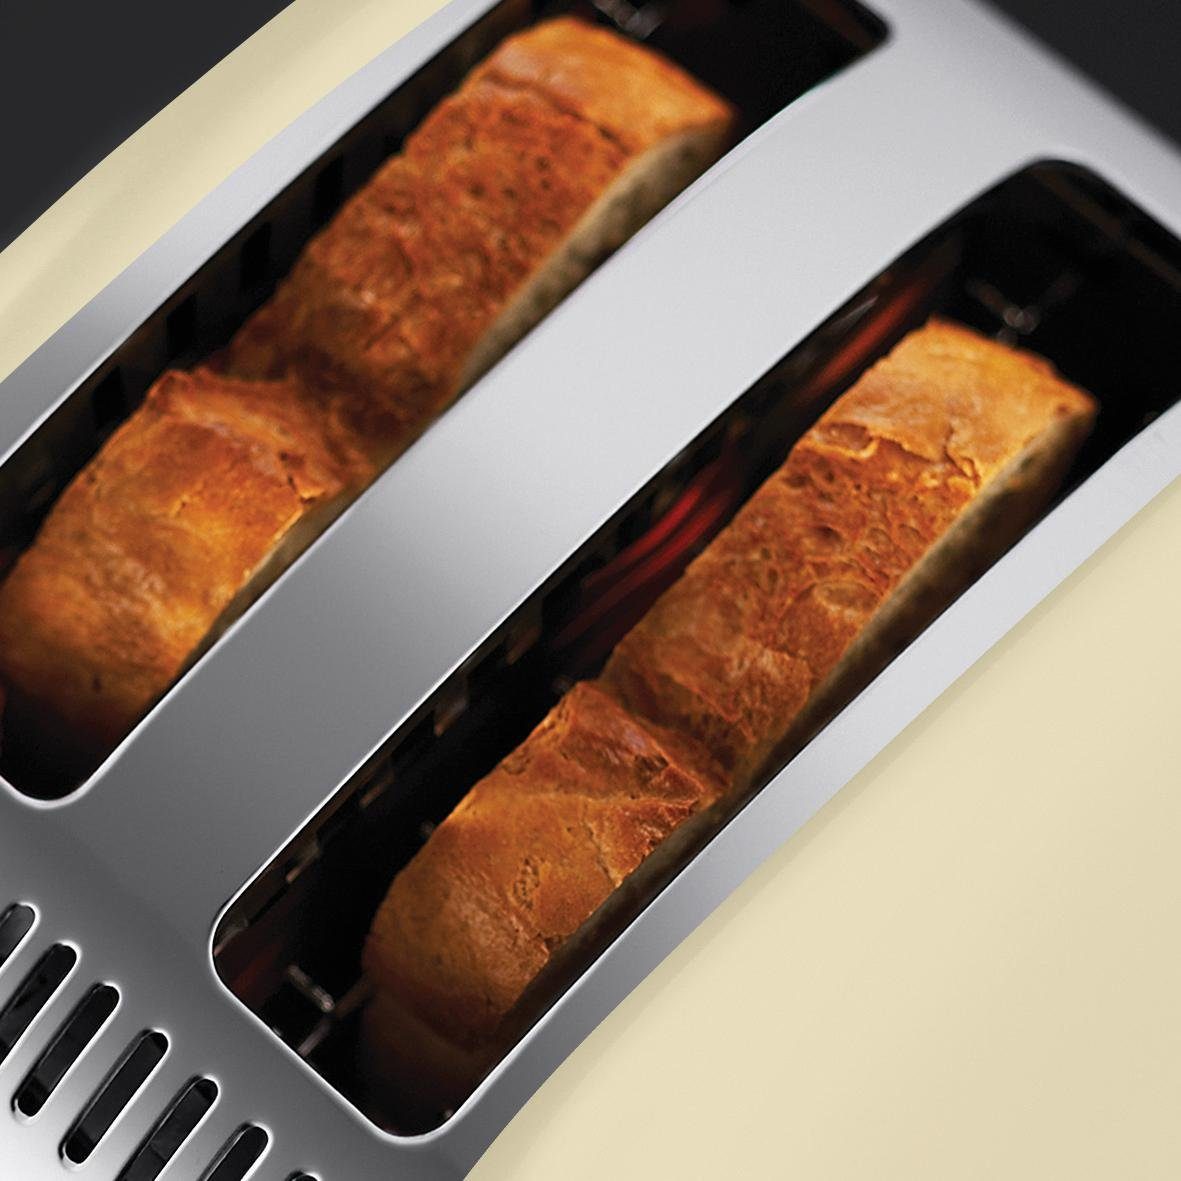 RUSSELL HOBBS Toaster Colours Classic Cream 23334-56, kurze Plus+ Schlitze, 2 1670 W